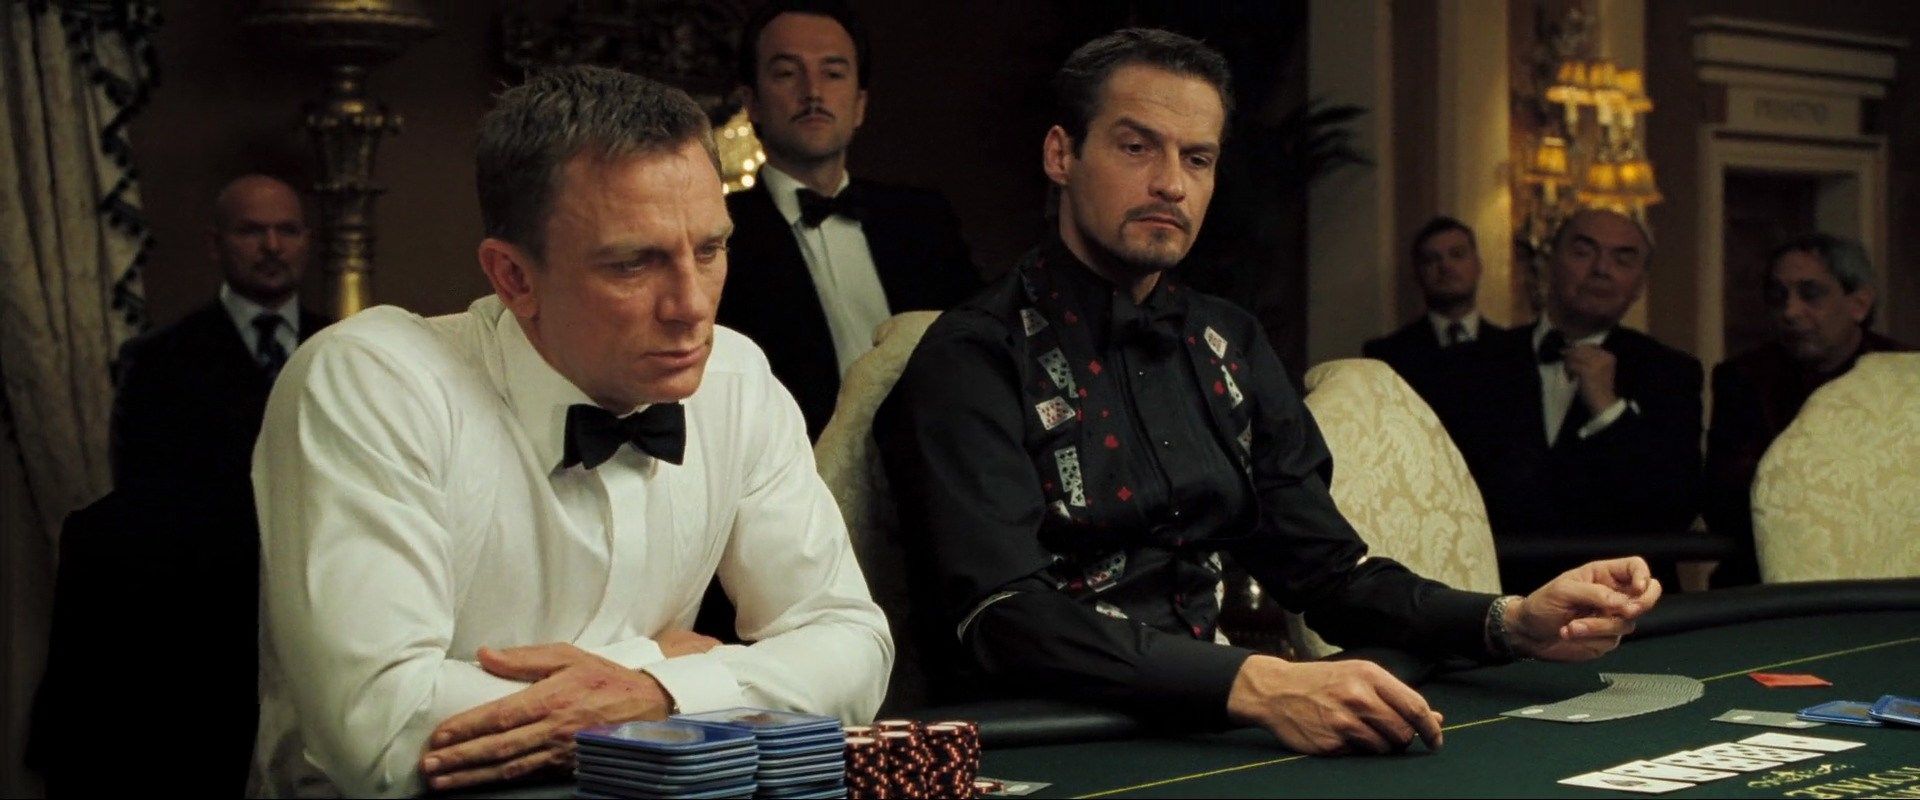 bond casino royale dealer vest